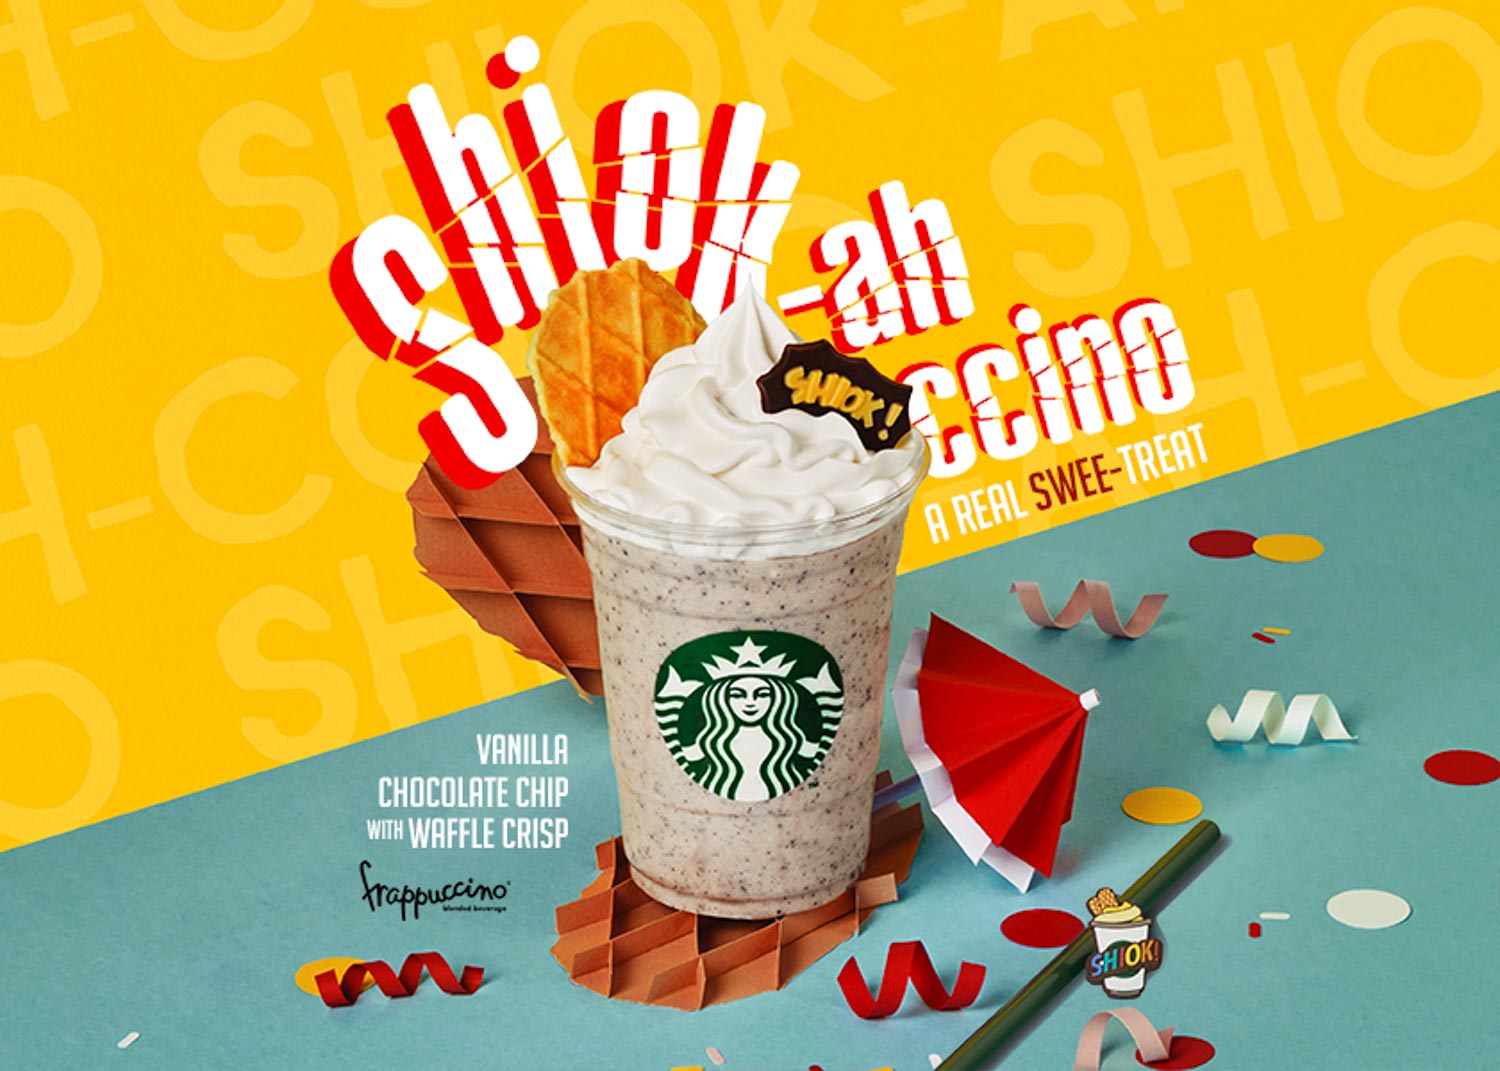 Starbucks Ice Cream Sandwich - Shiok-aa-cino